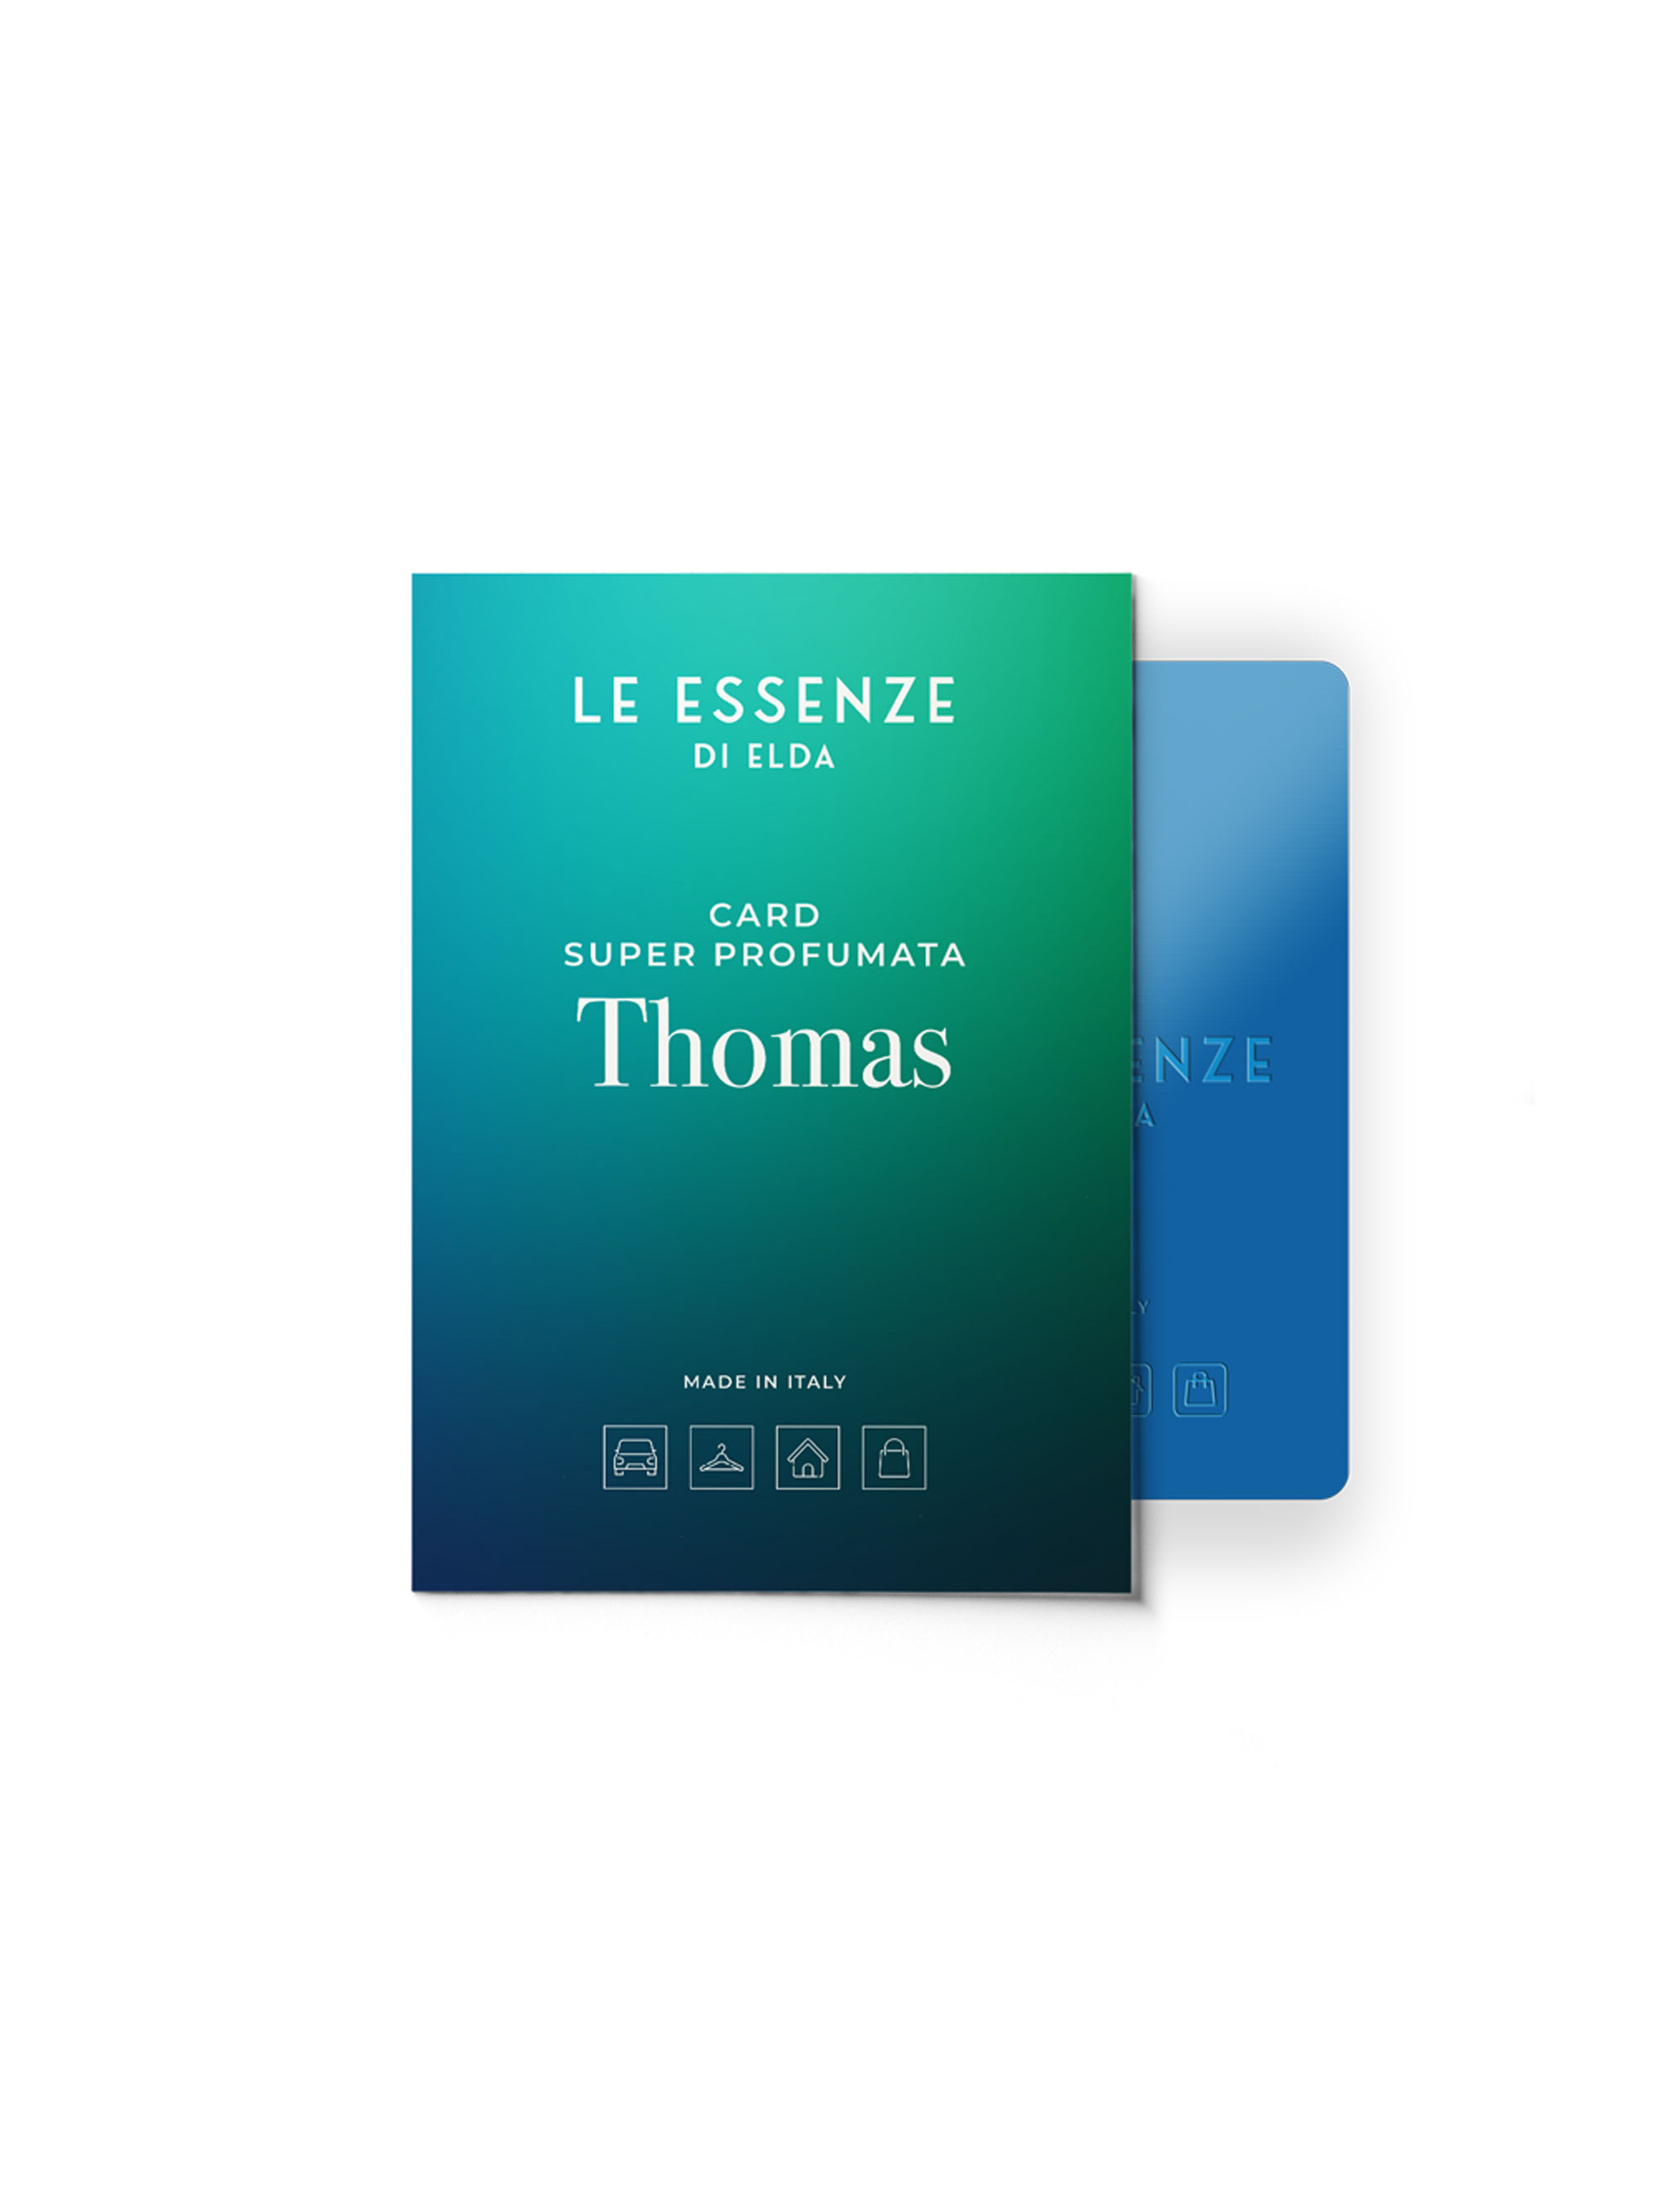 Card Super Profumata Thomas - tarjetas súper perfumadas